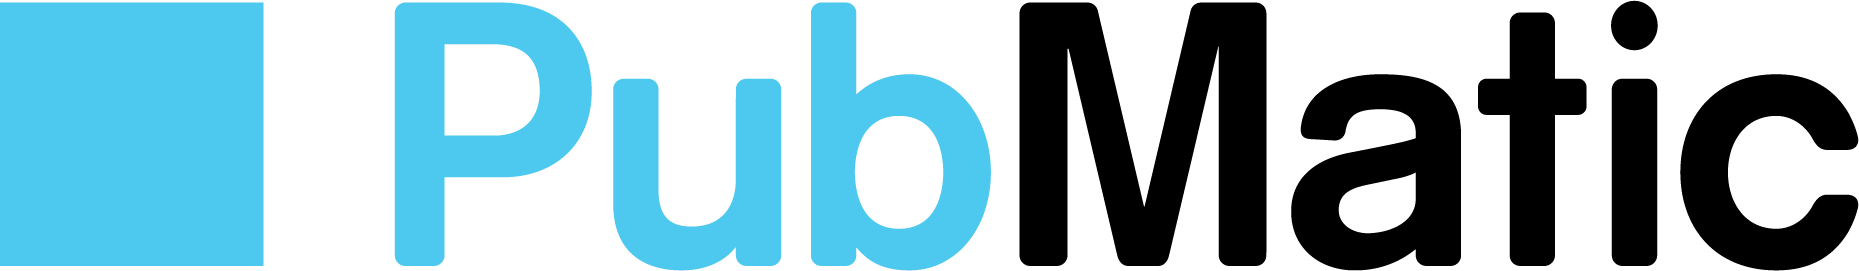 PubMatic_Logo